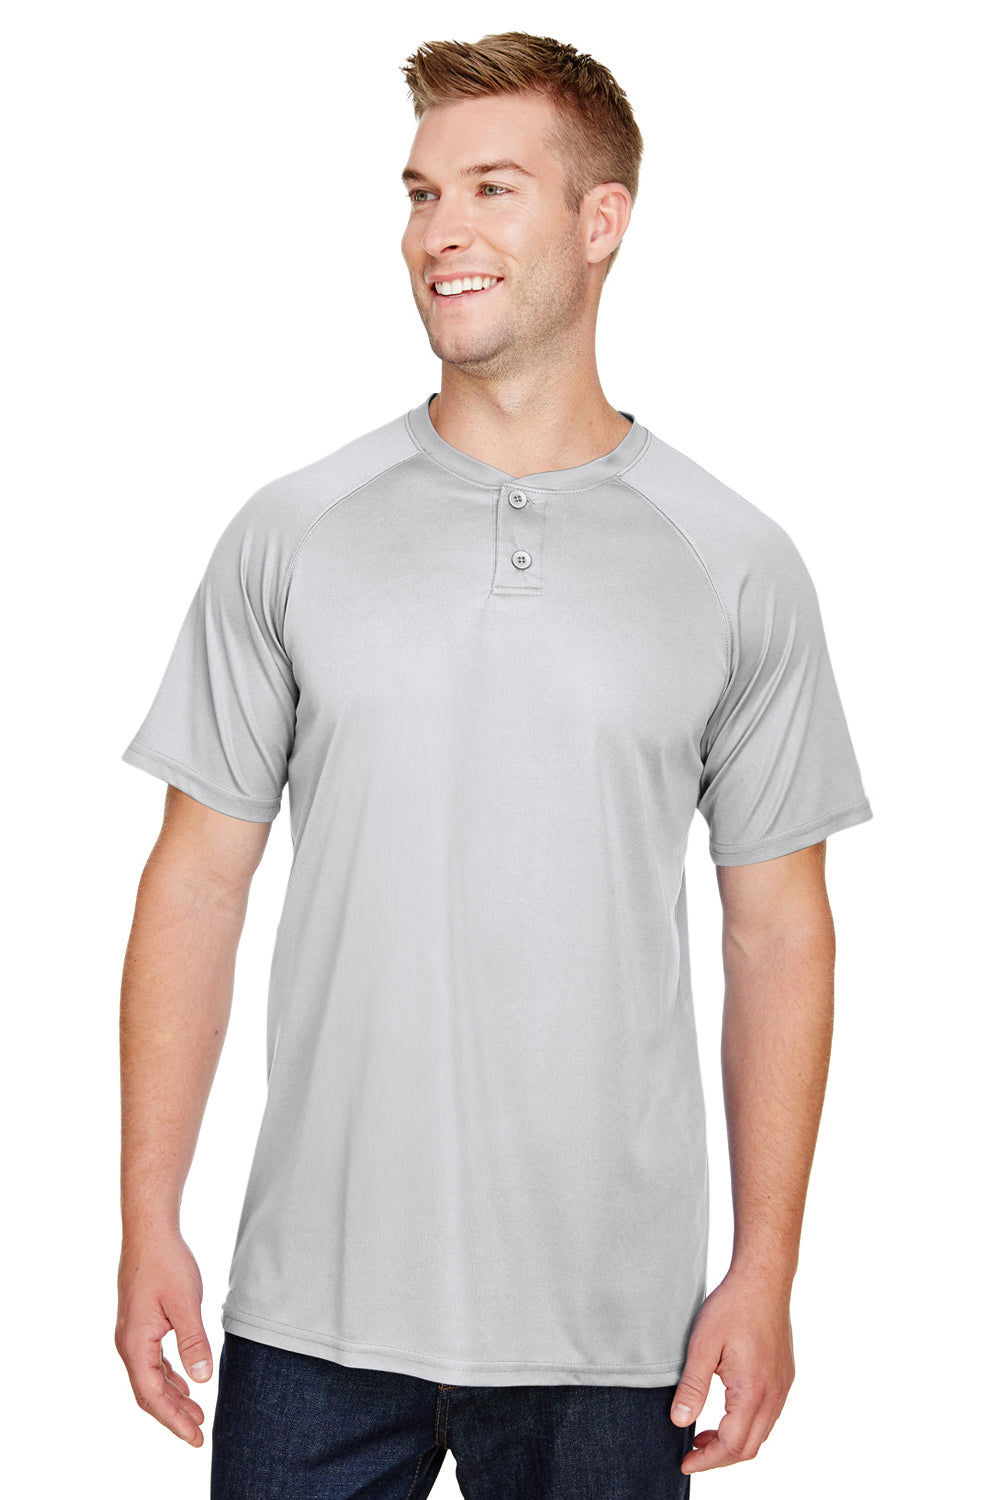 Augusta Sportswear AG1565 Mens Attain 2 Moisture Wicking Button Short Sleeve Baseball Jersey Silver Grey Model Front